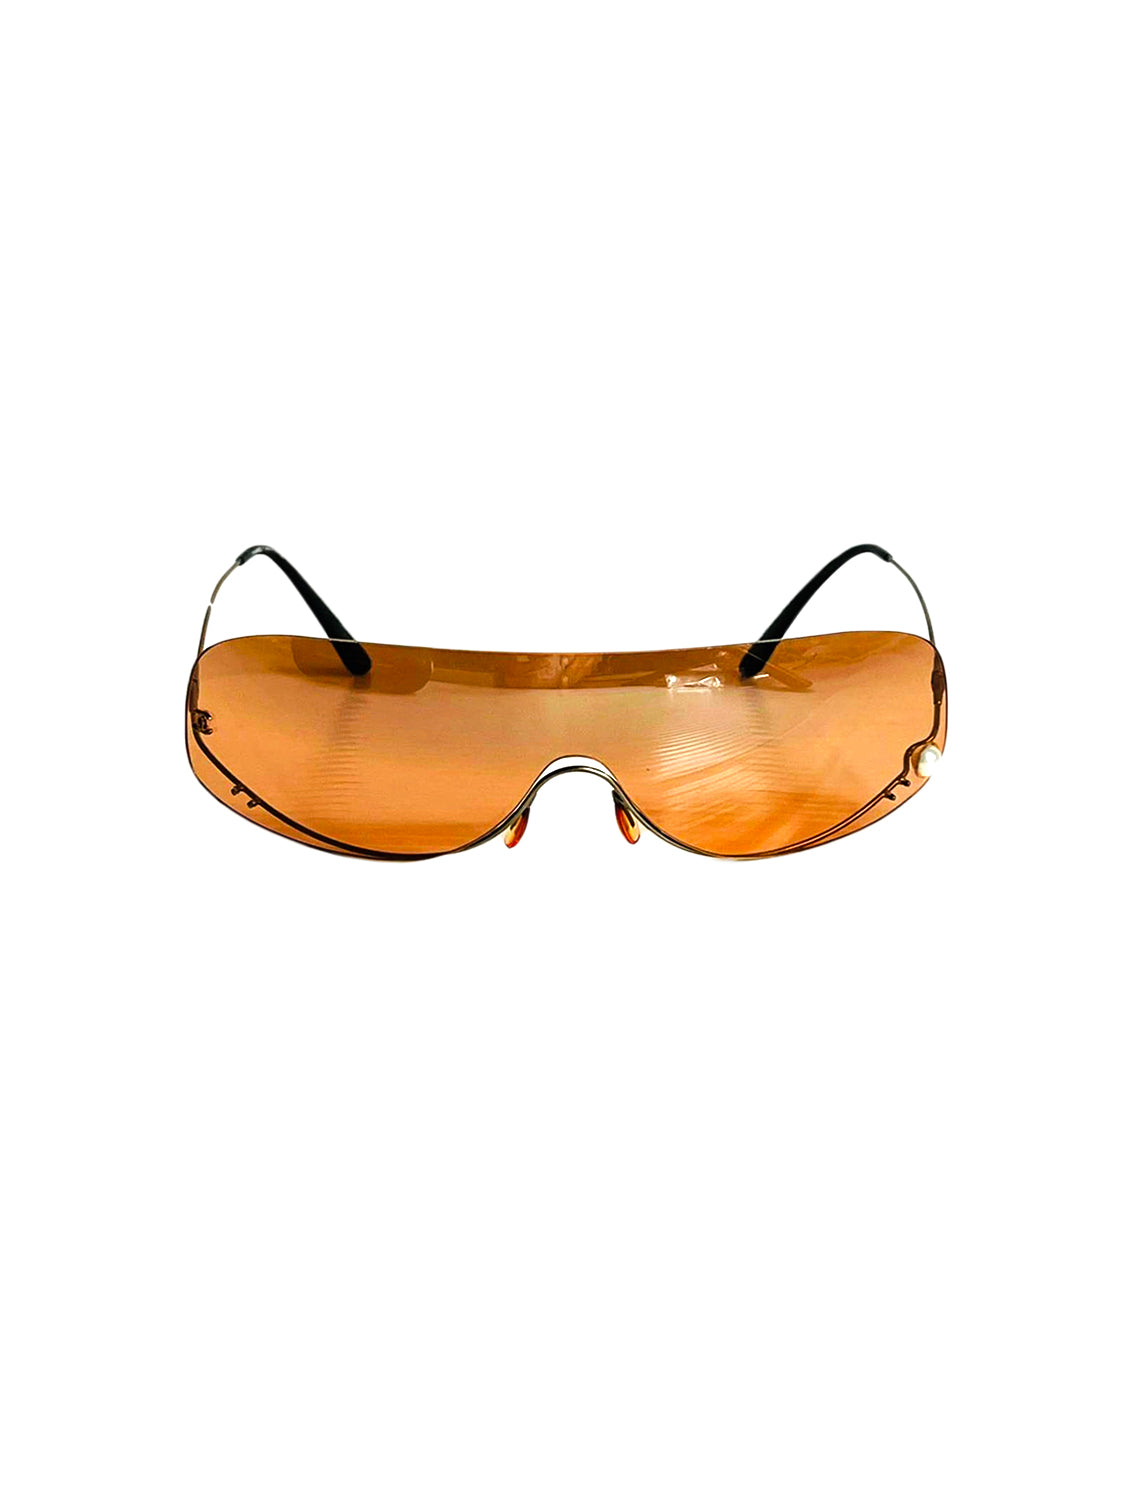 Chanel Sport Orange Visor Sunglasses